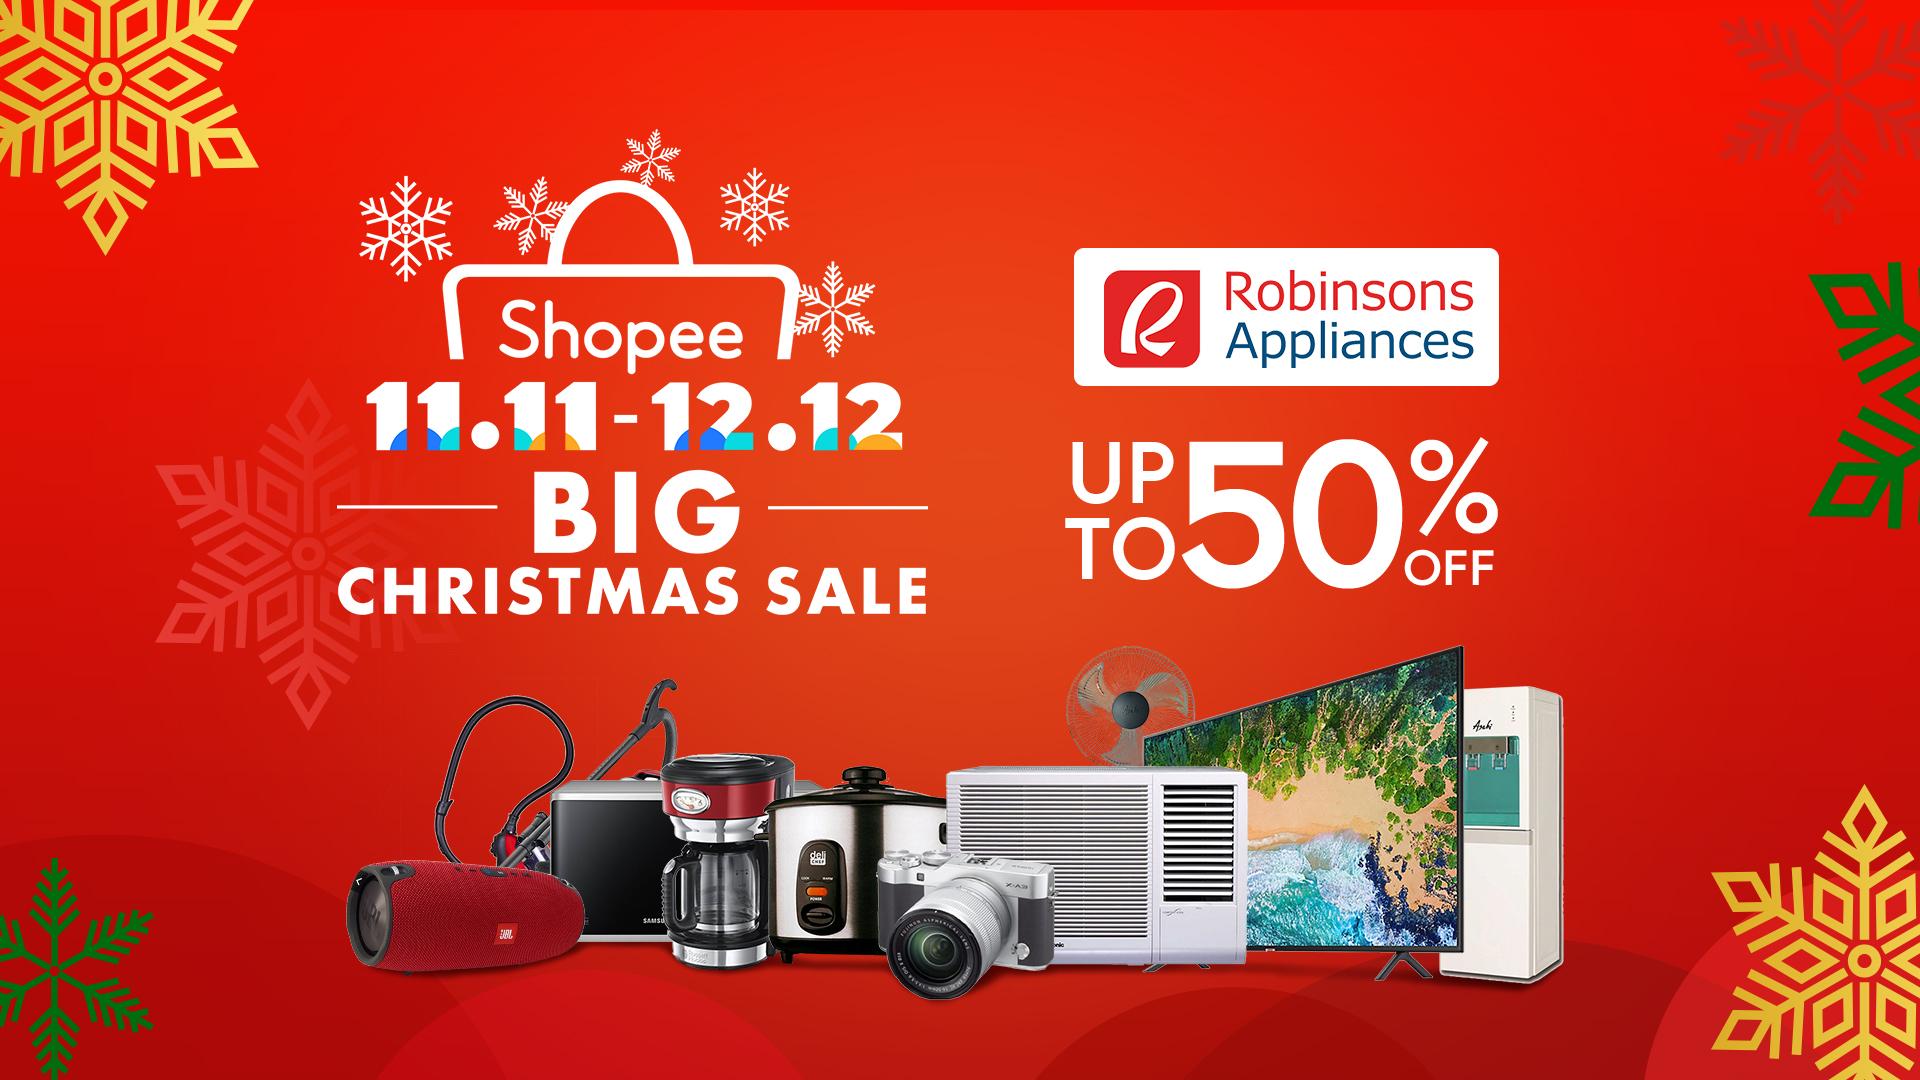 Robinsons Appliances Joins The Shopee 11.11 - 12.12 Big Christmas Sale